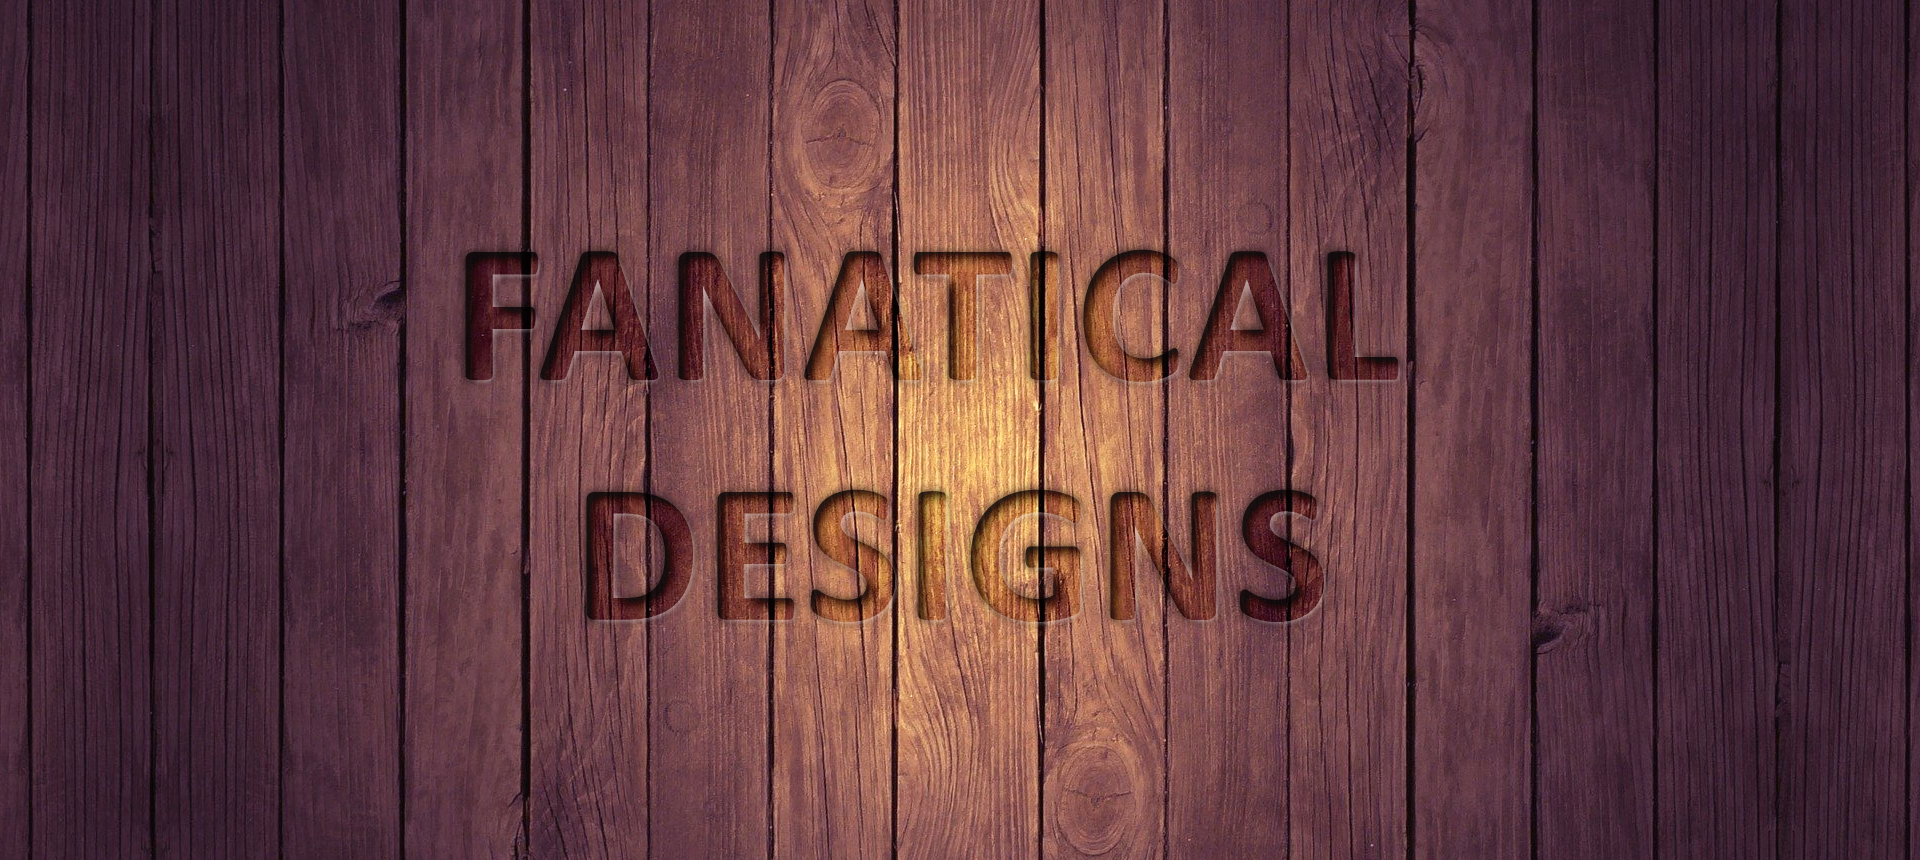 Fanatical Designs Banner